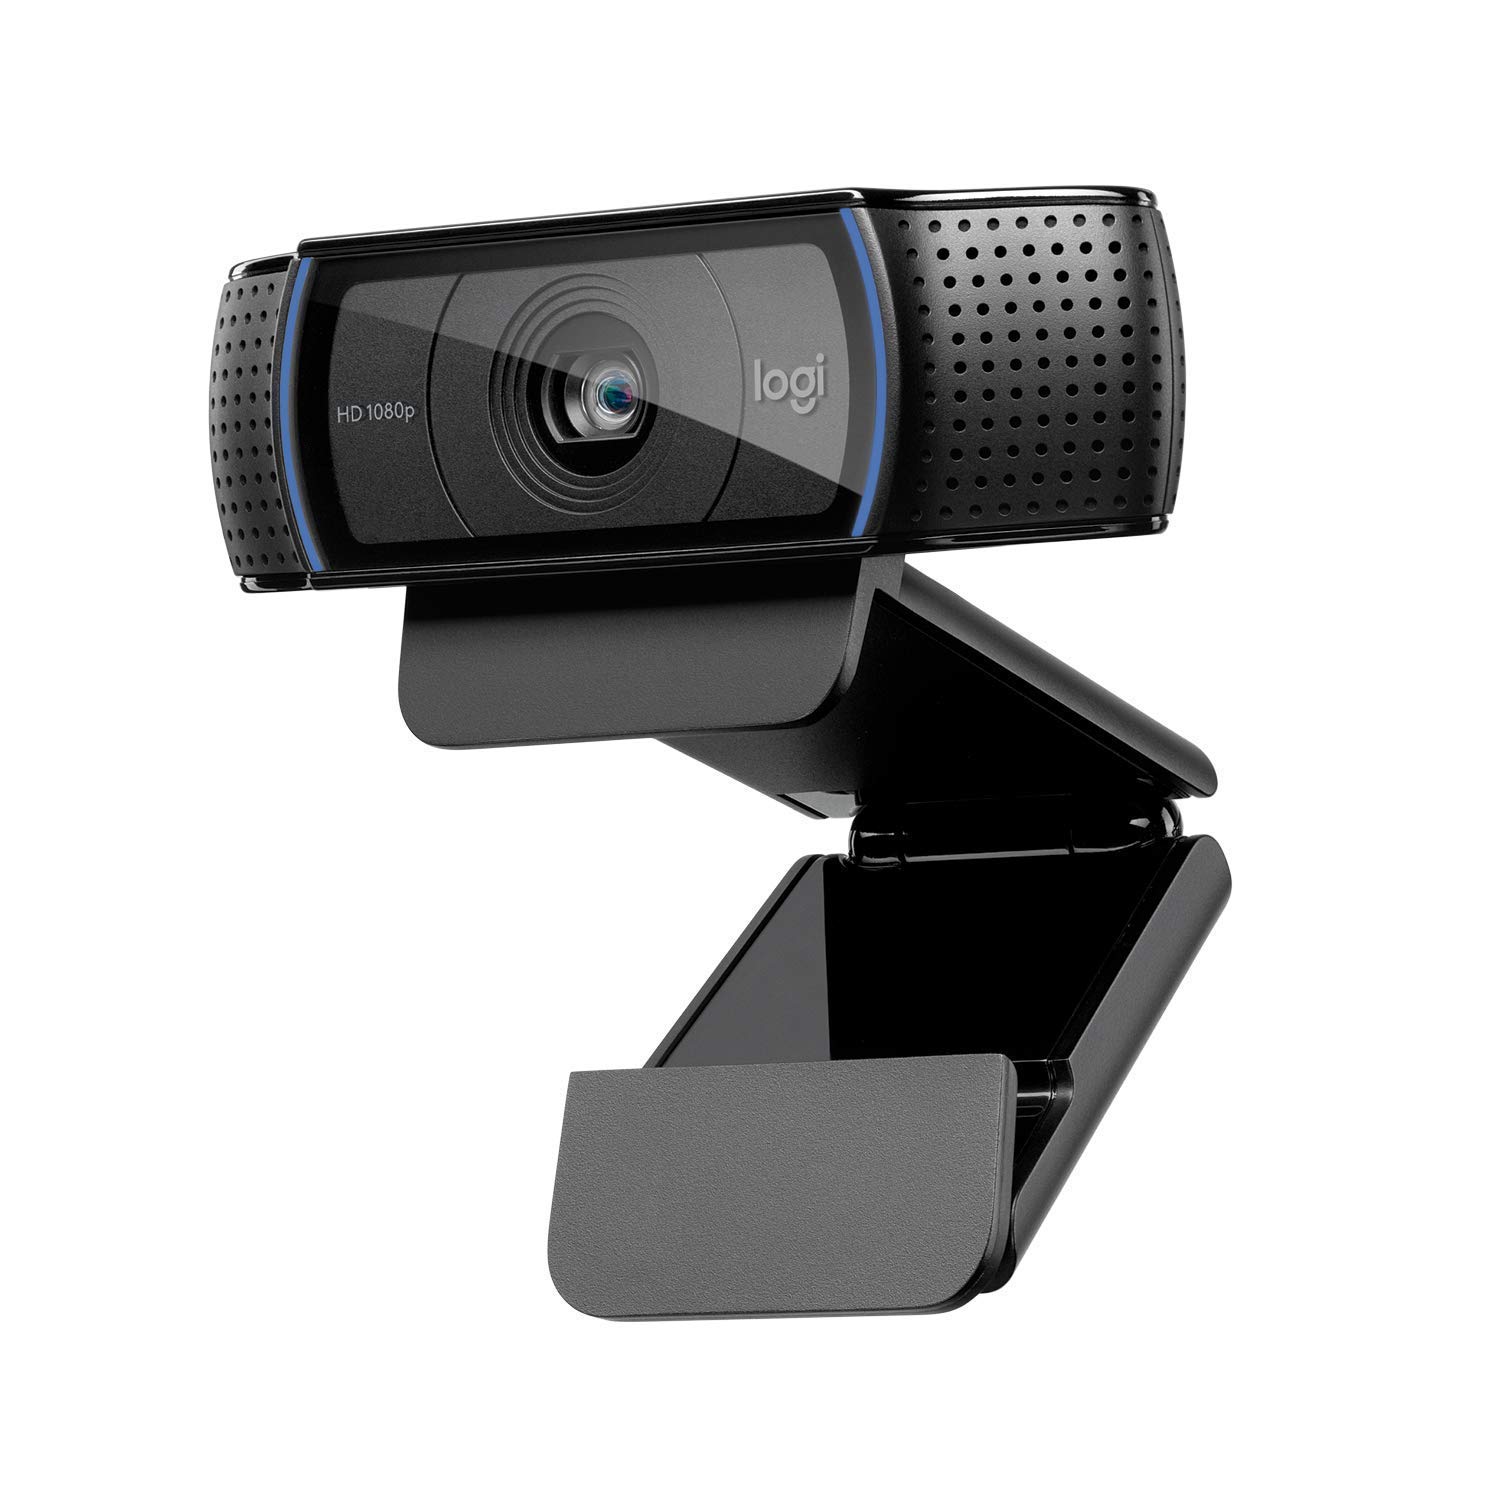 Logitech C920x Pro HD Webcam $44.95 + Free Shipping